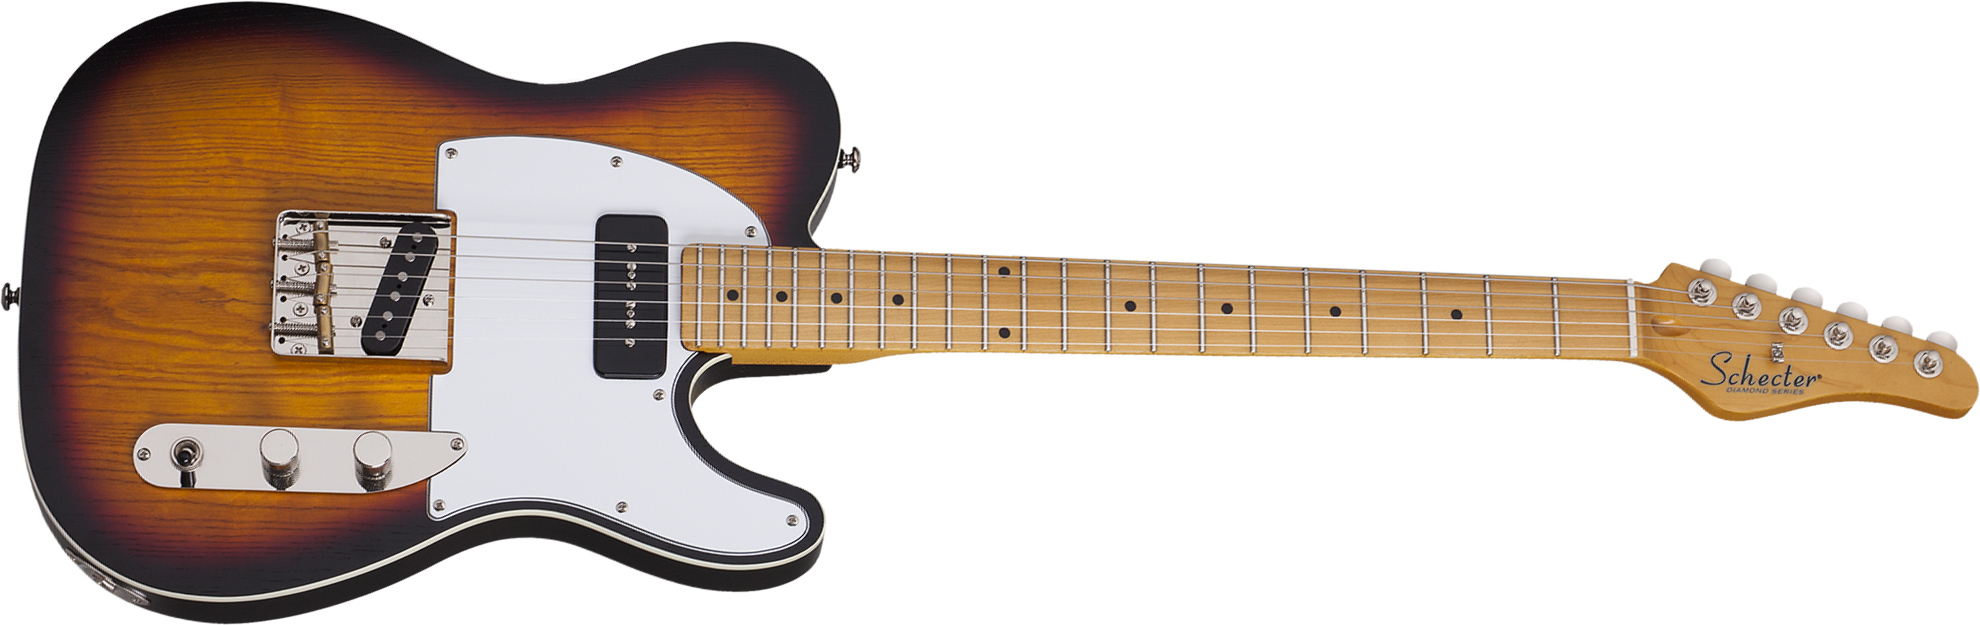 Schecter Pt Special 2s Ht Mn - 3-tone Sunburst Pearl - Tel shape electric guitar - Main picture